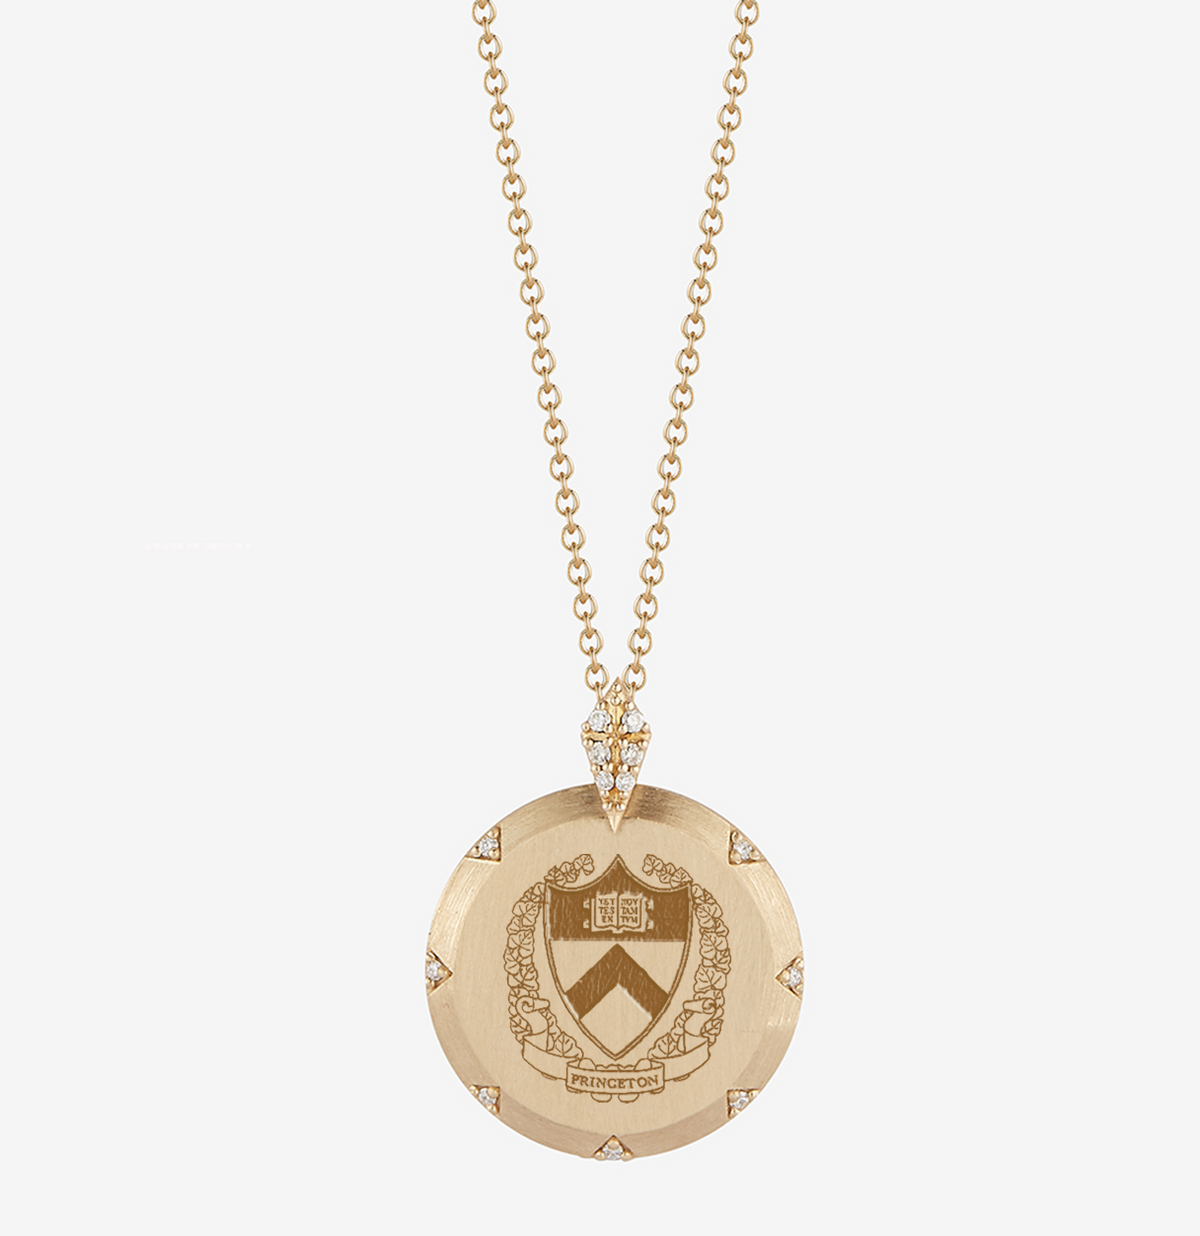 Princeton 7-Point Diamond Necklace